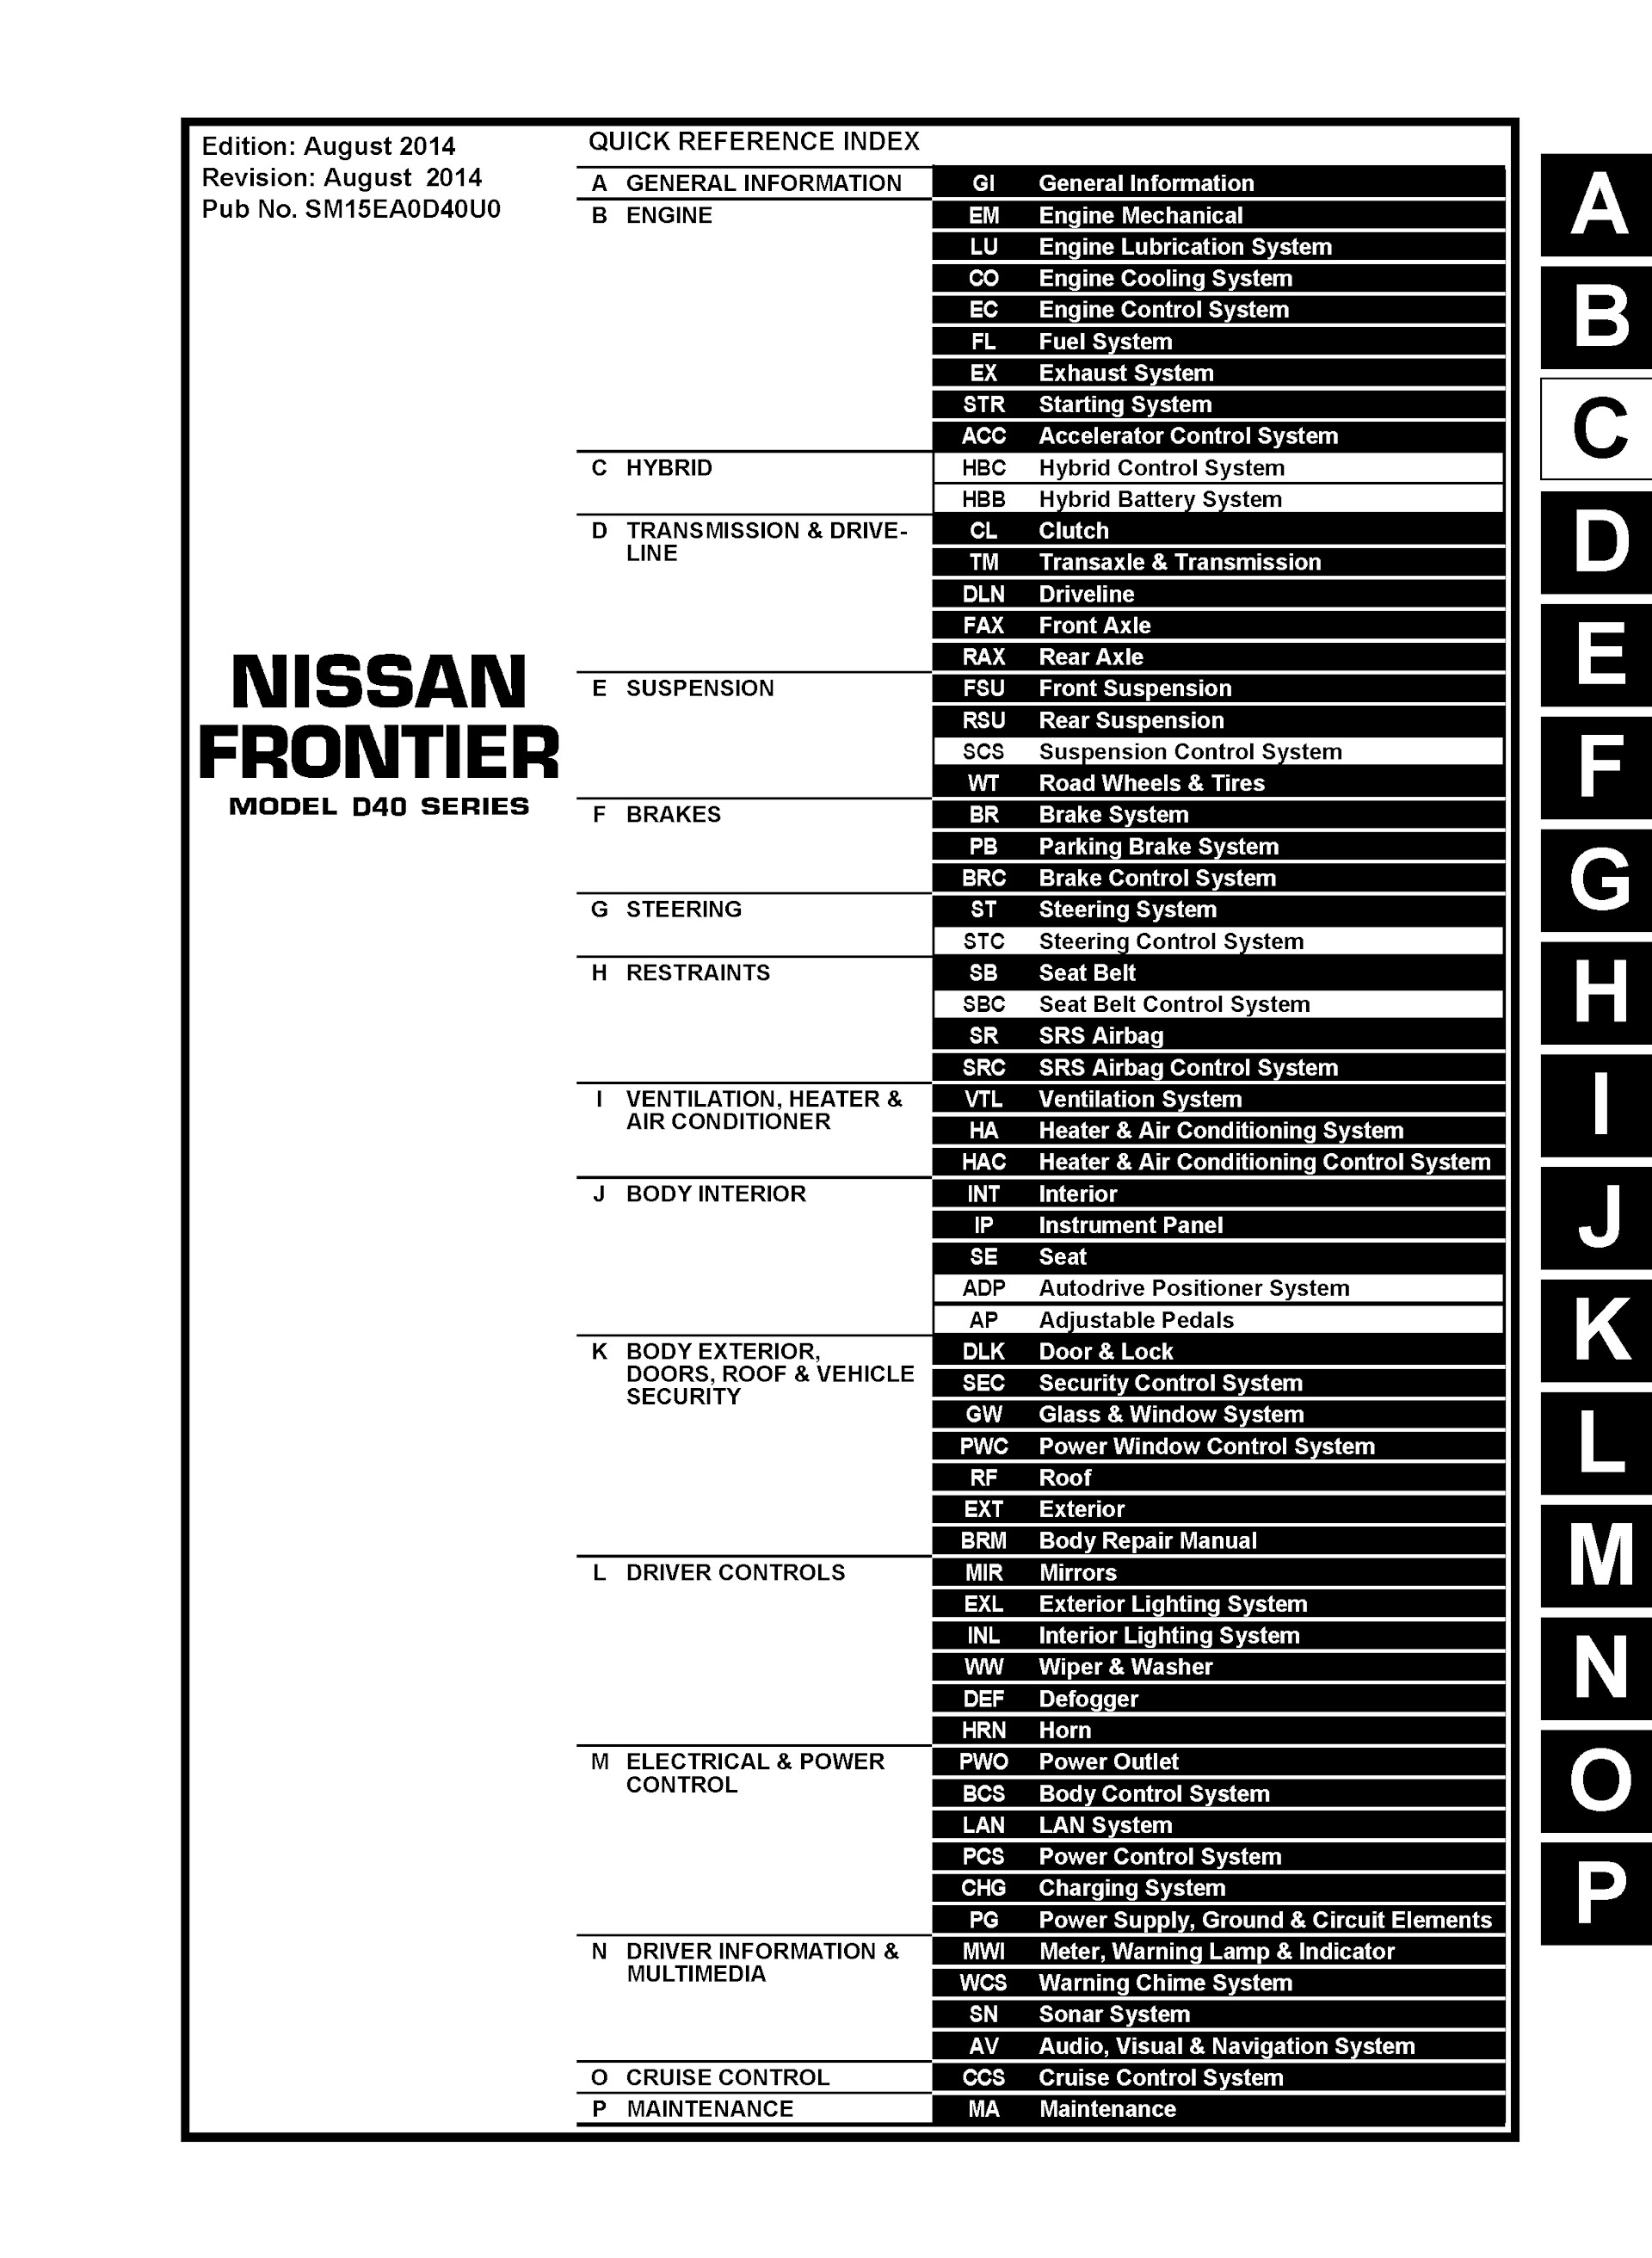 CONTENTS: 2015 Nissan Frontier Repair Manual